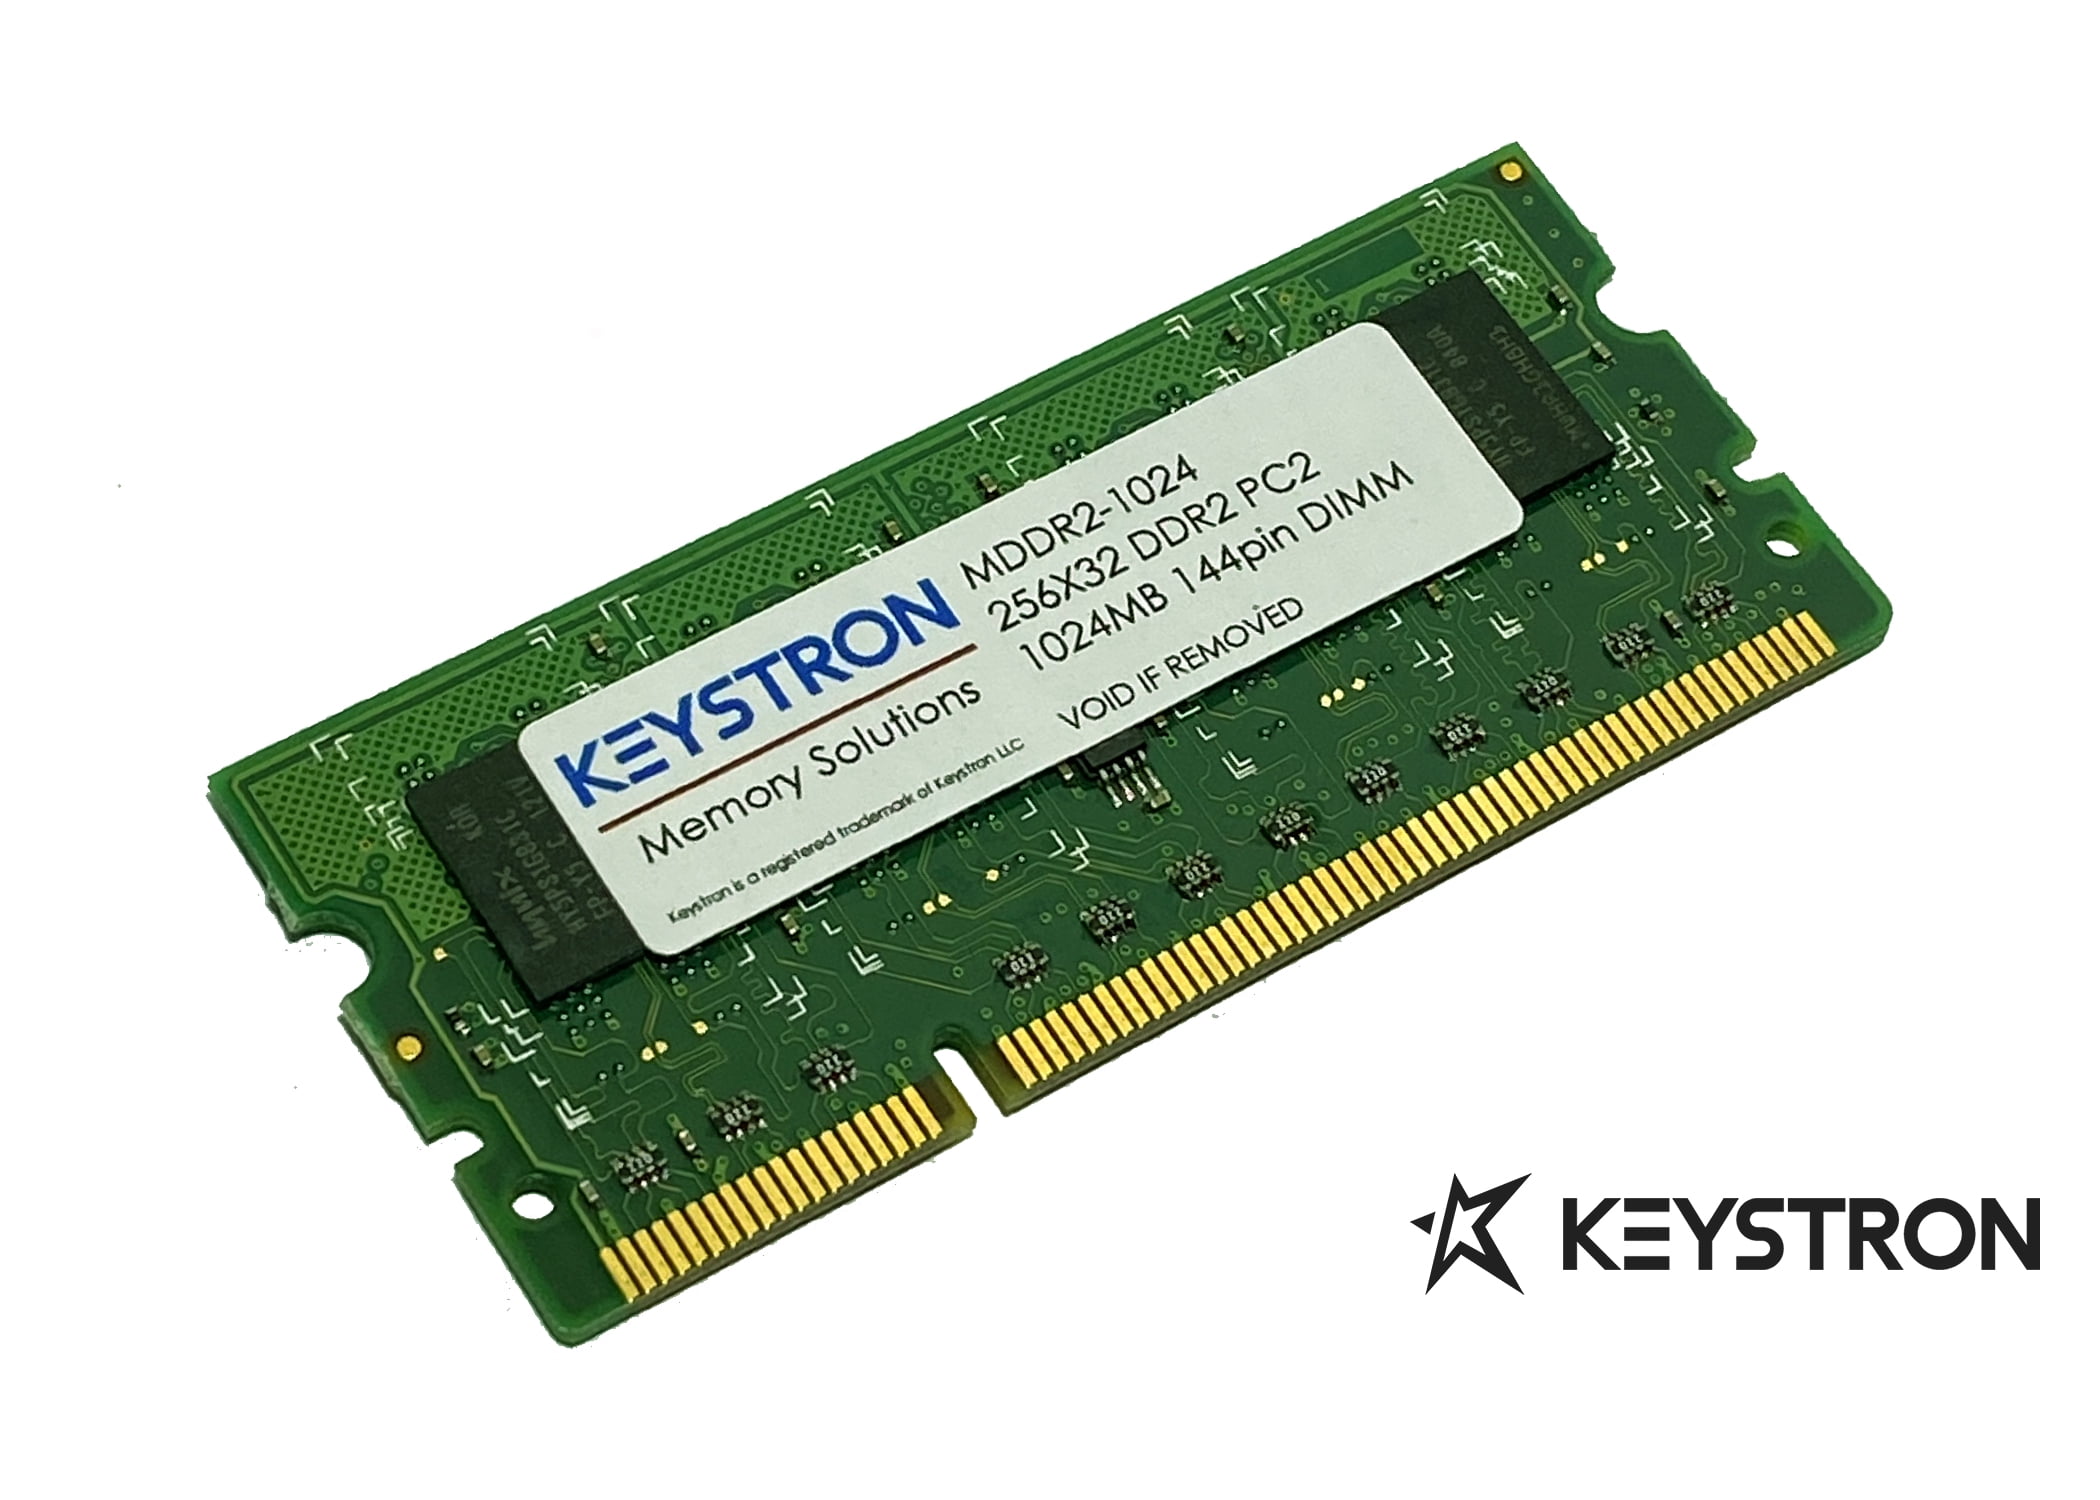 256MB Kyocera Printer Memory for Kyocera FS-820 FS-920 FS-1020D FS-1030D FS-1030DN FS-1080MFP FS-1100 FS-1118MFP FS-1300D FS-1920 FS-1920D FS-3820 3820N 3830 3830N 8008C 9120DN 9520 9520DN 